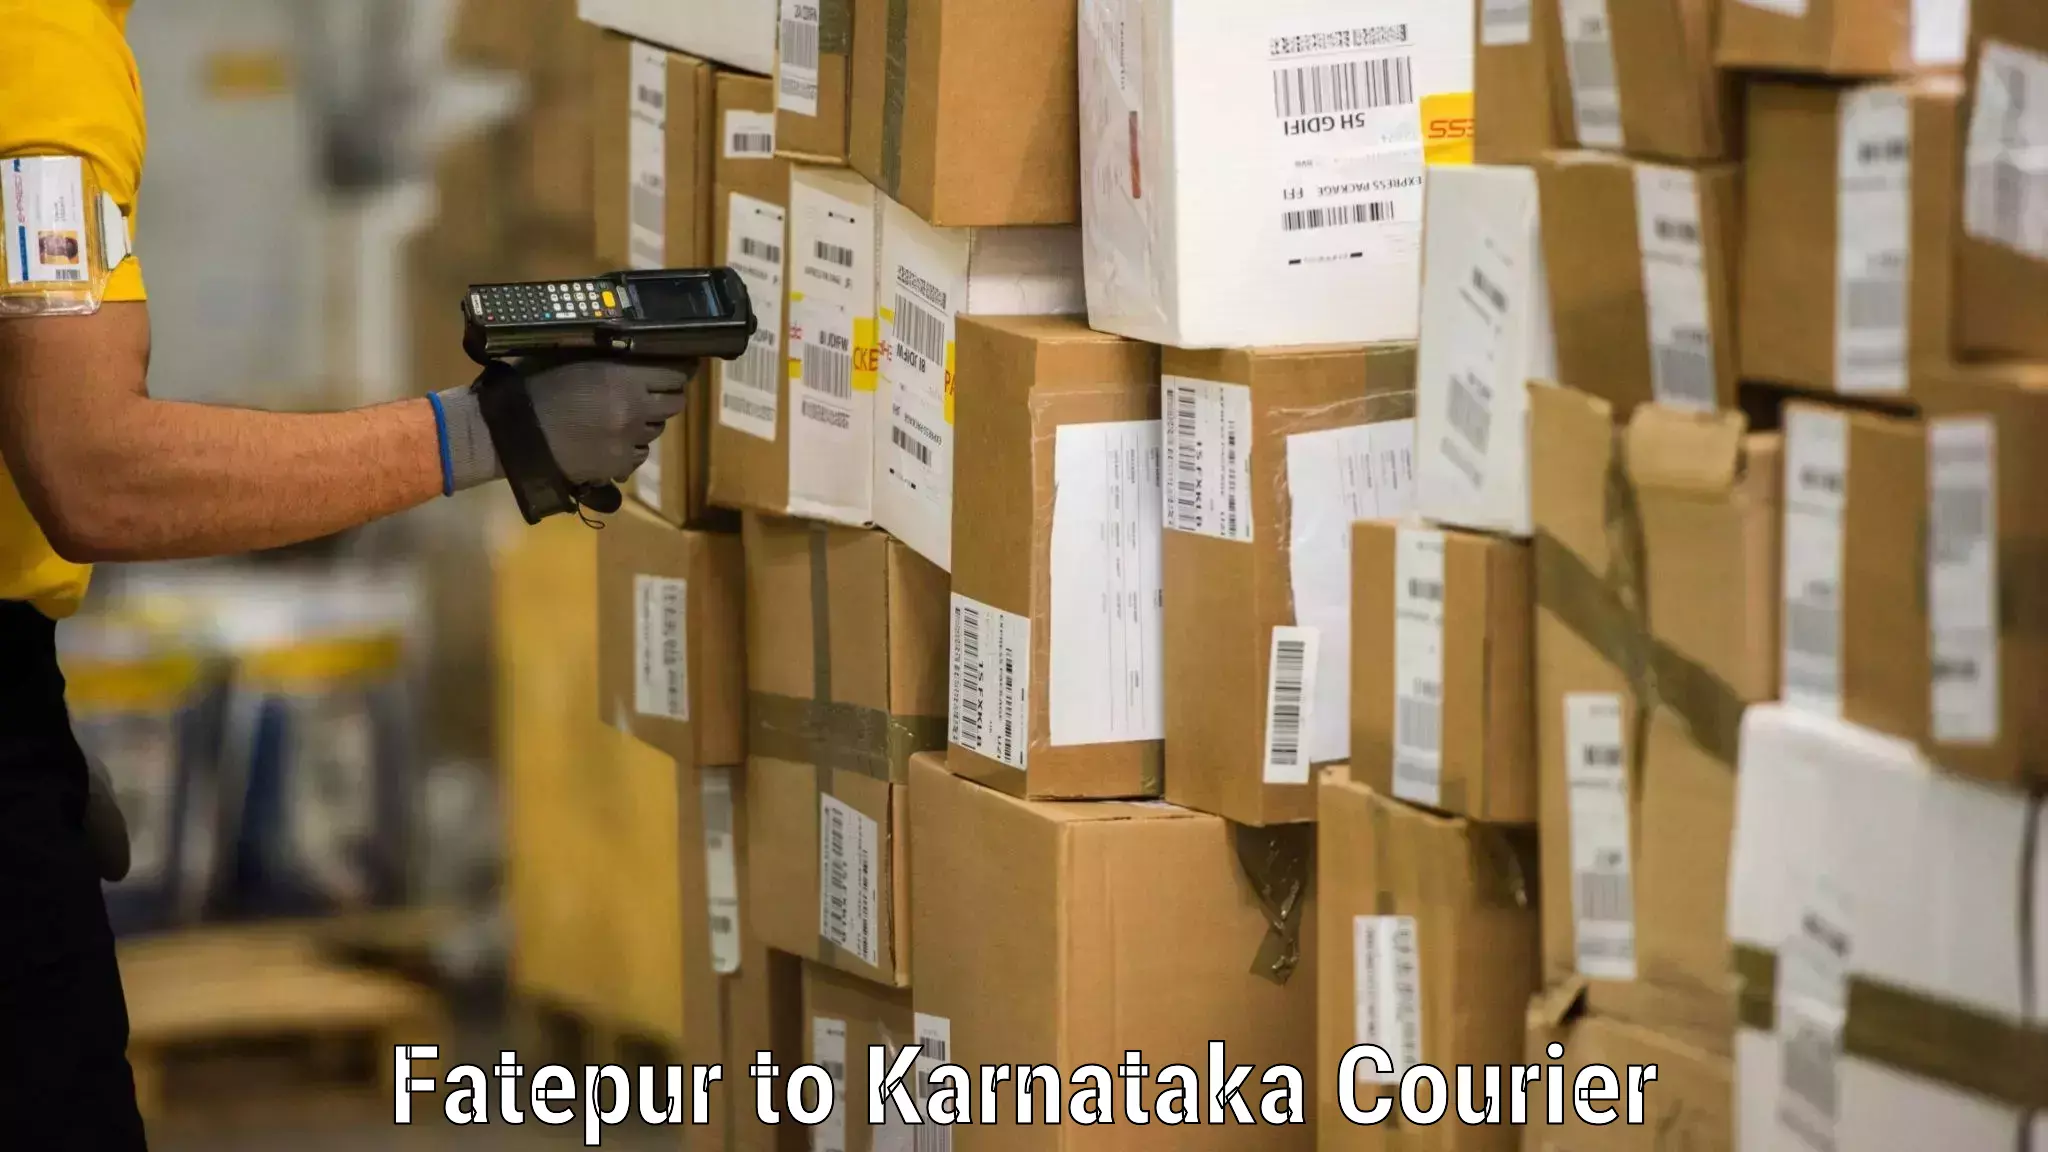 Moving and packing experts Fatepur to Karnataka